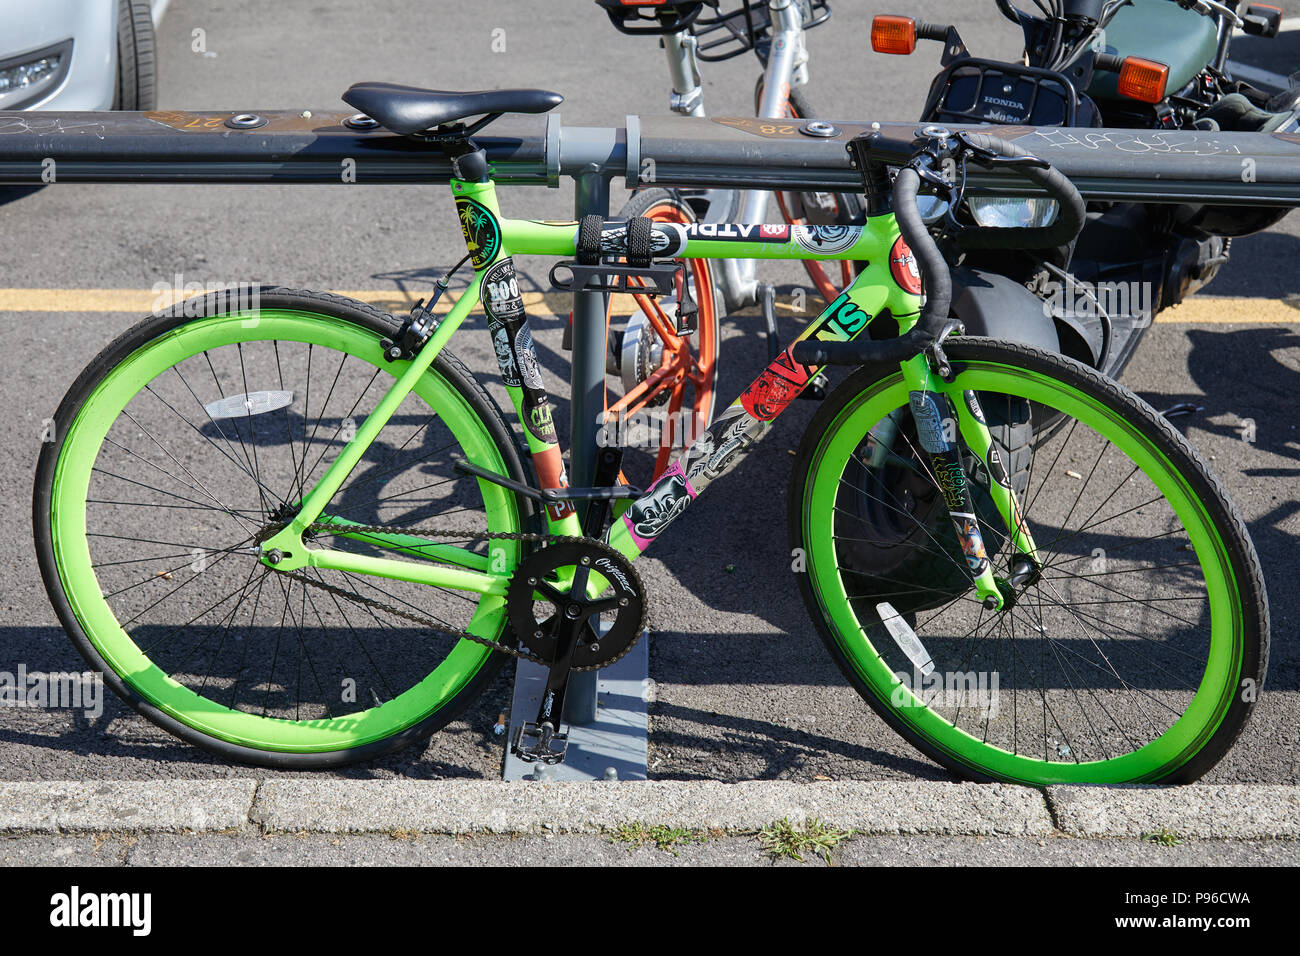 MILAN - JUNE 18: Single speed green bike with stickers seen before Pal Zileri fashion show, Milan Fashion Week street style on June 18, 2018 in Milan. Stock Photo